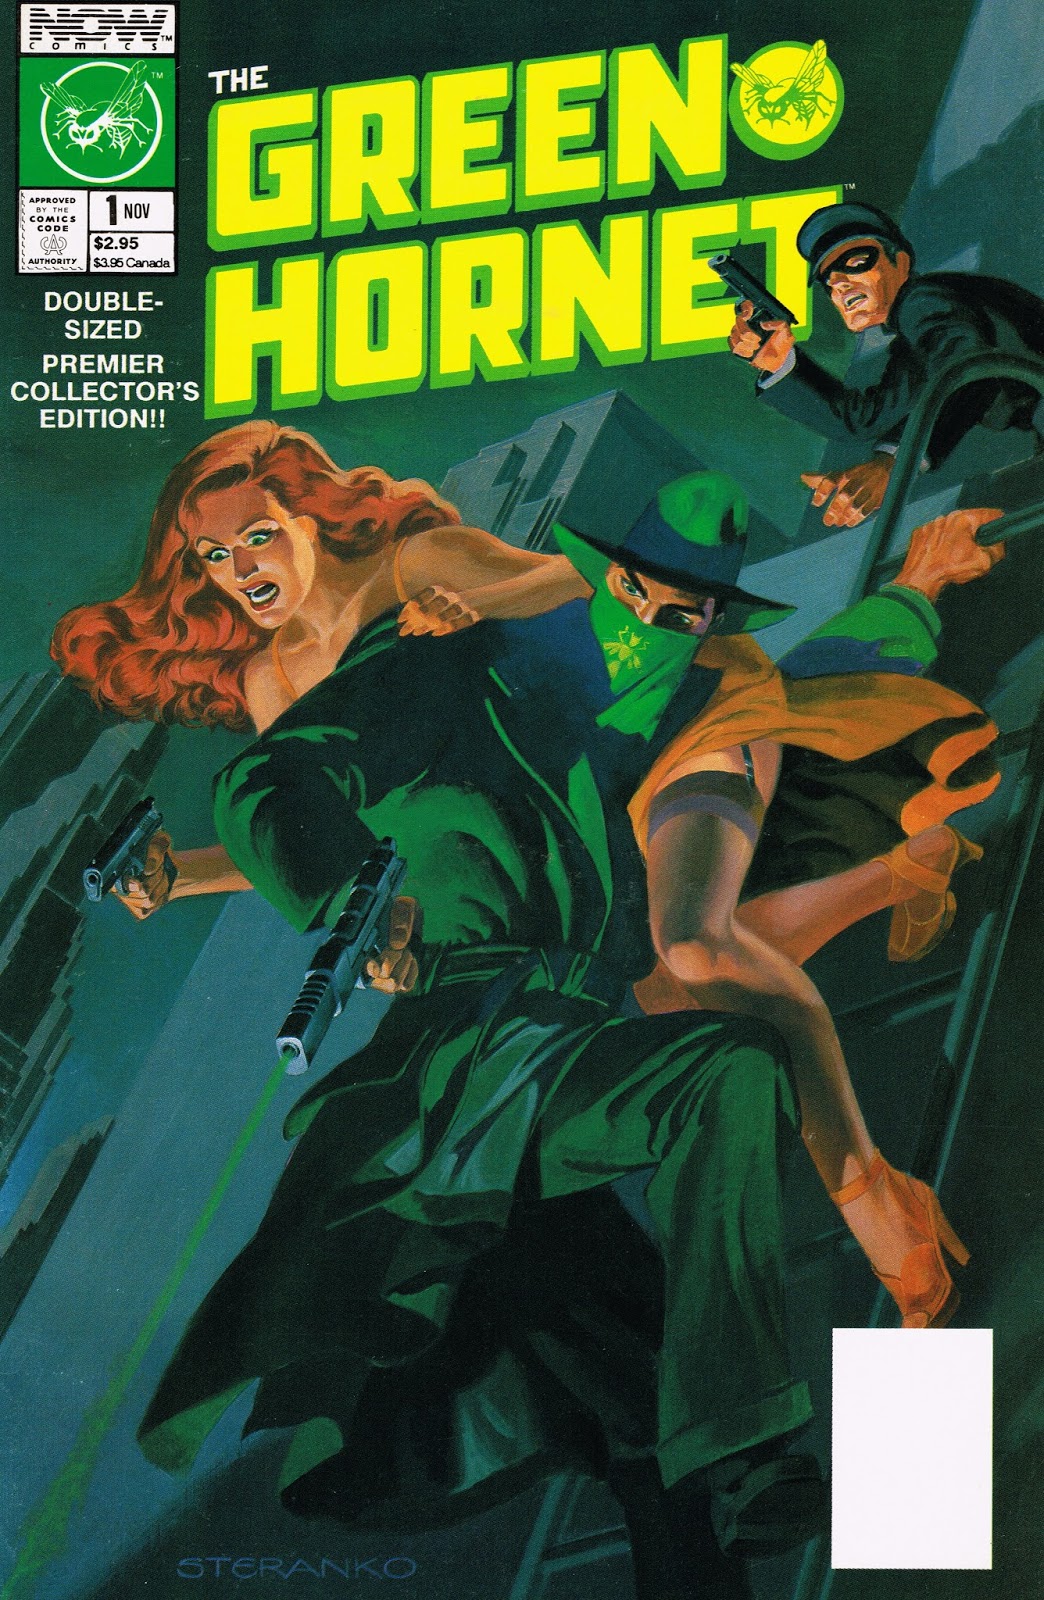 Image result for green hornet comic book